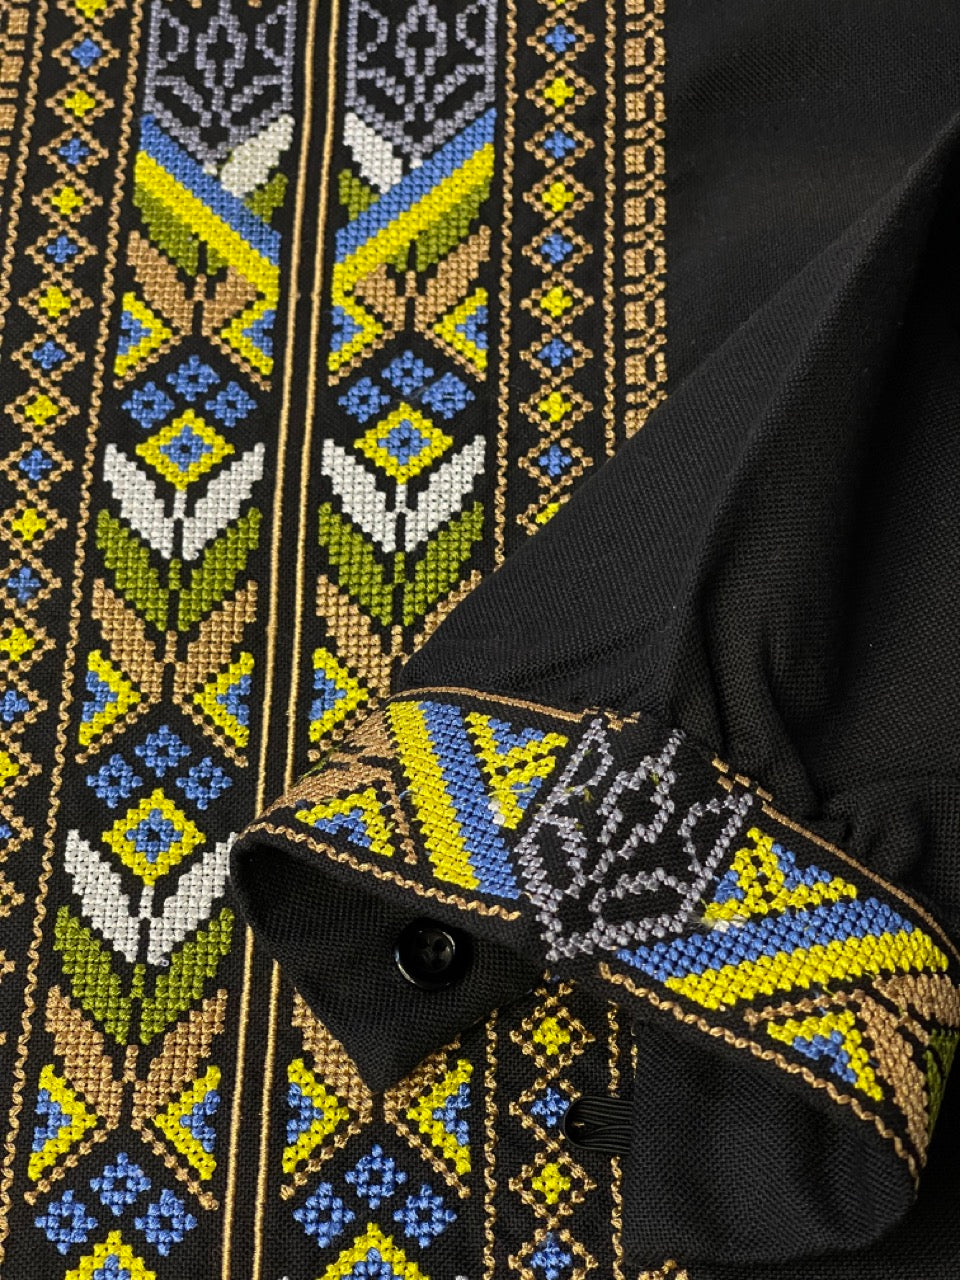 Black Men's Vyshyvanka Embroidered with Ukrainian Symbol and Flag